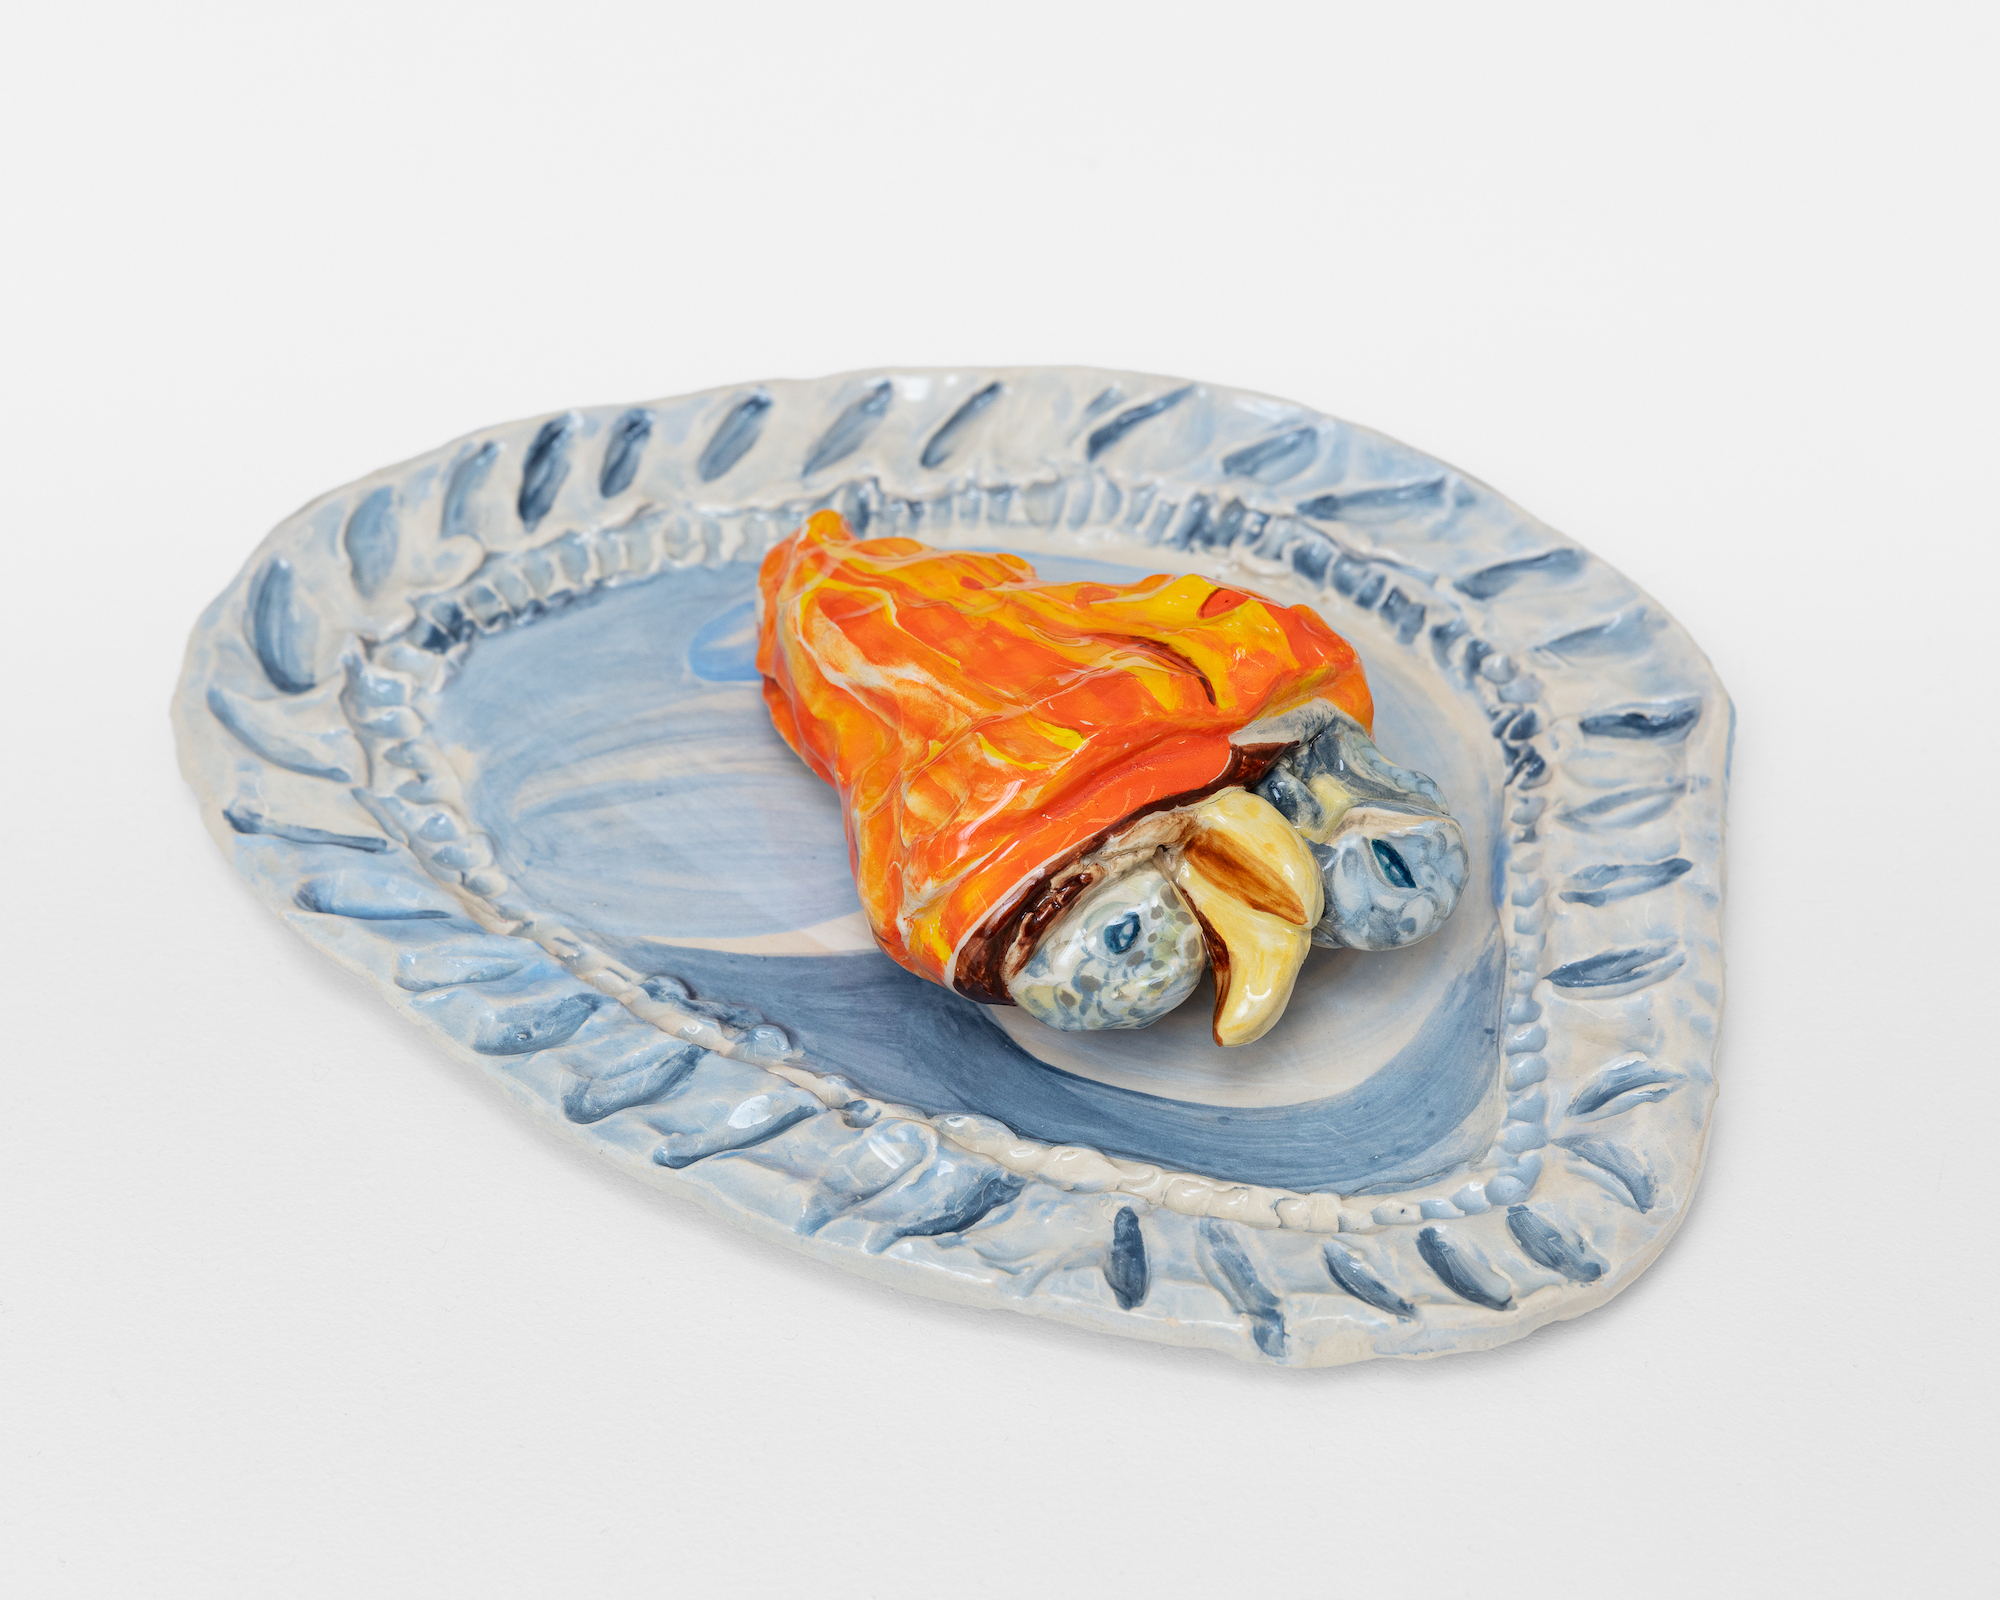 Nellie Jonsson, Fish'n'nchips servering, 2023, Glazed ceramic, 7 x 25.5 x 22 cm